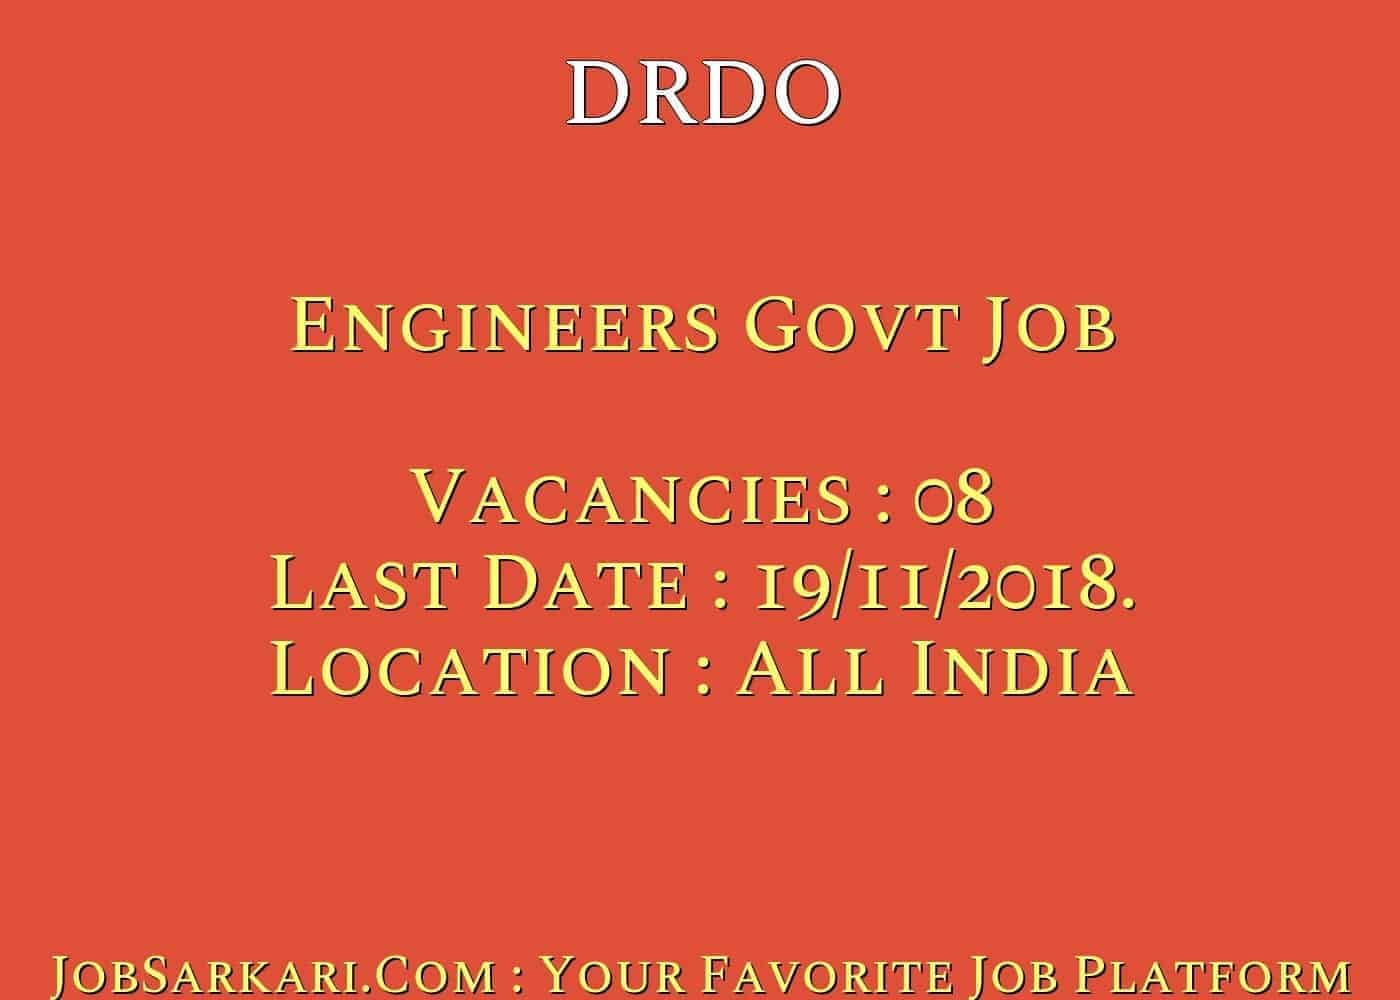 DRDO Recruitment 2018 for Engineers Govt Job